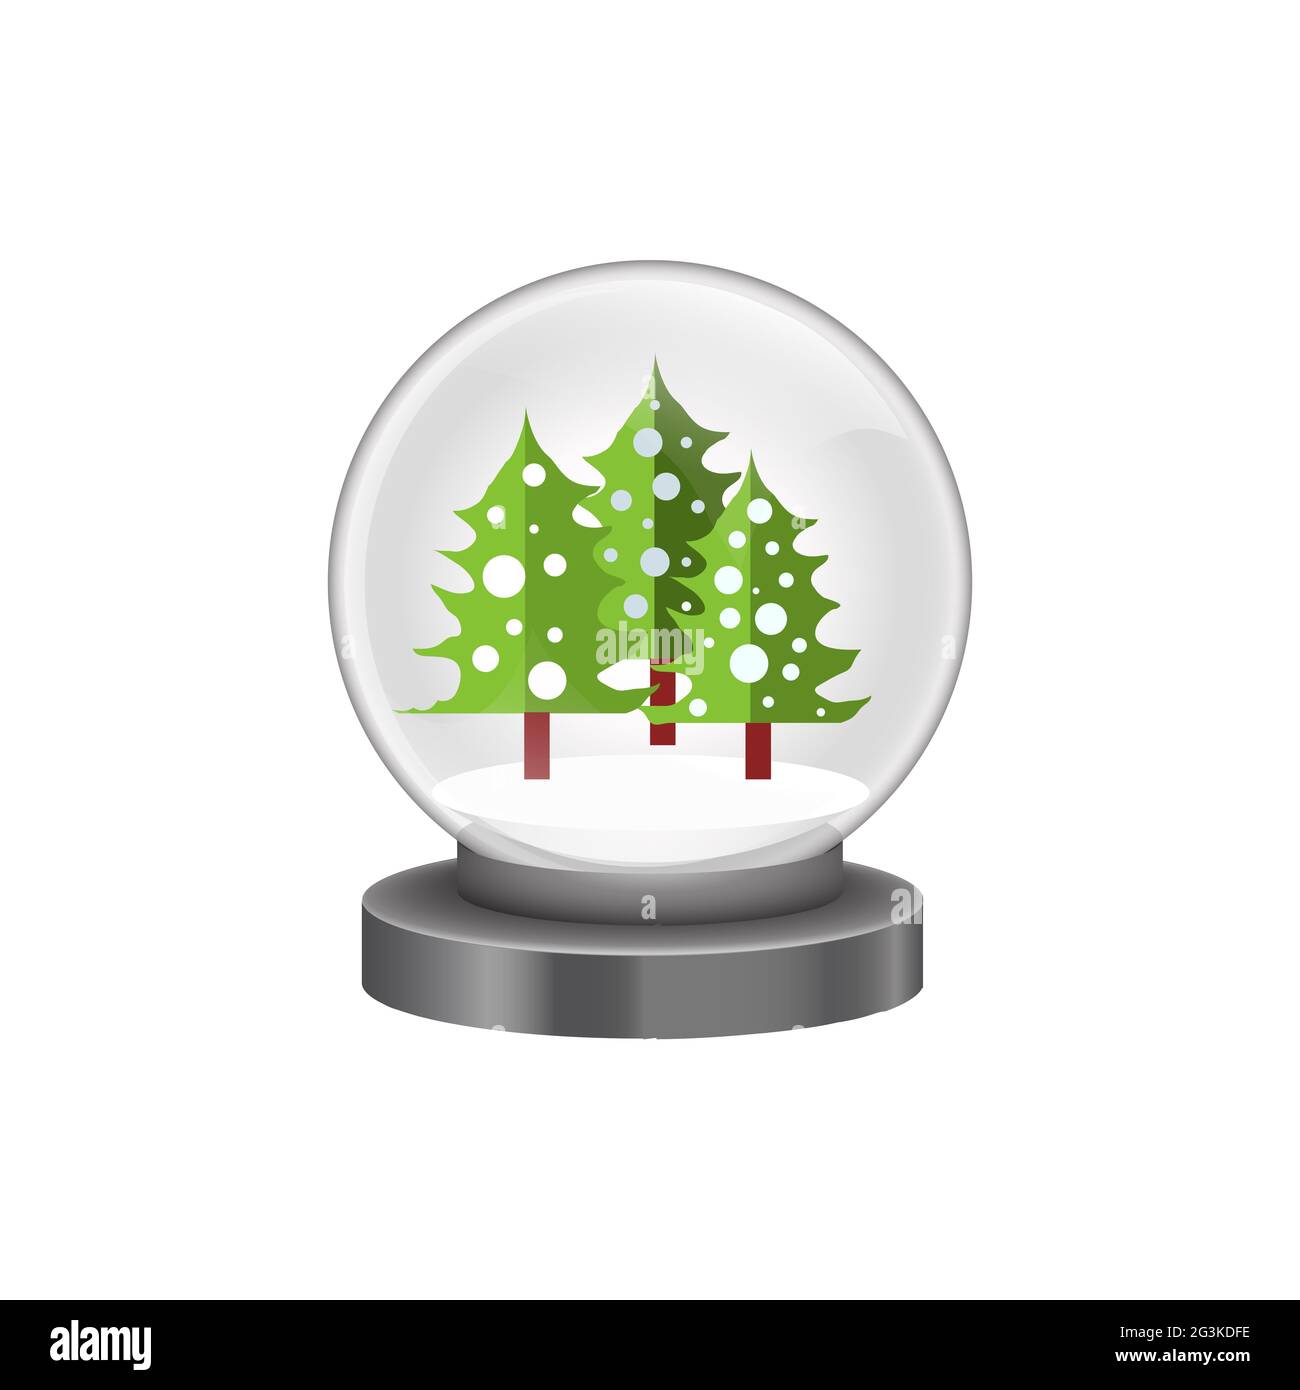 Illustration of modern snow globe with pine trees Stock Photo